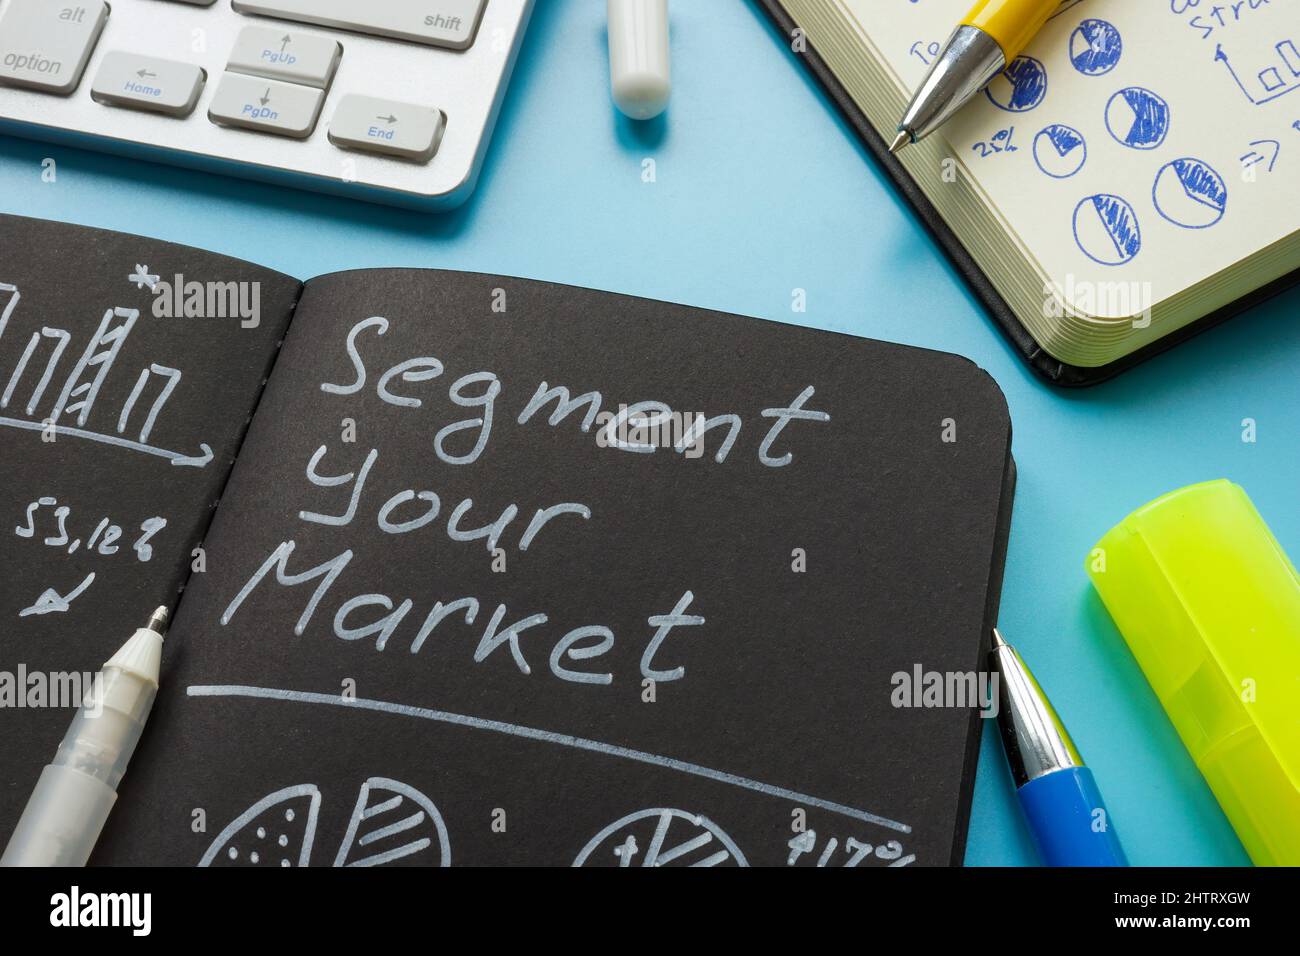 Segment your market sign about segmentation in marketing. Stock Photo